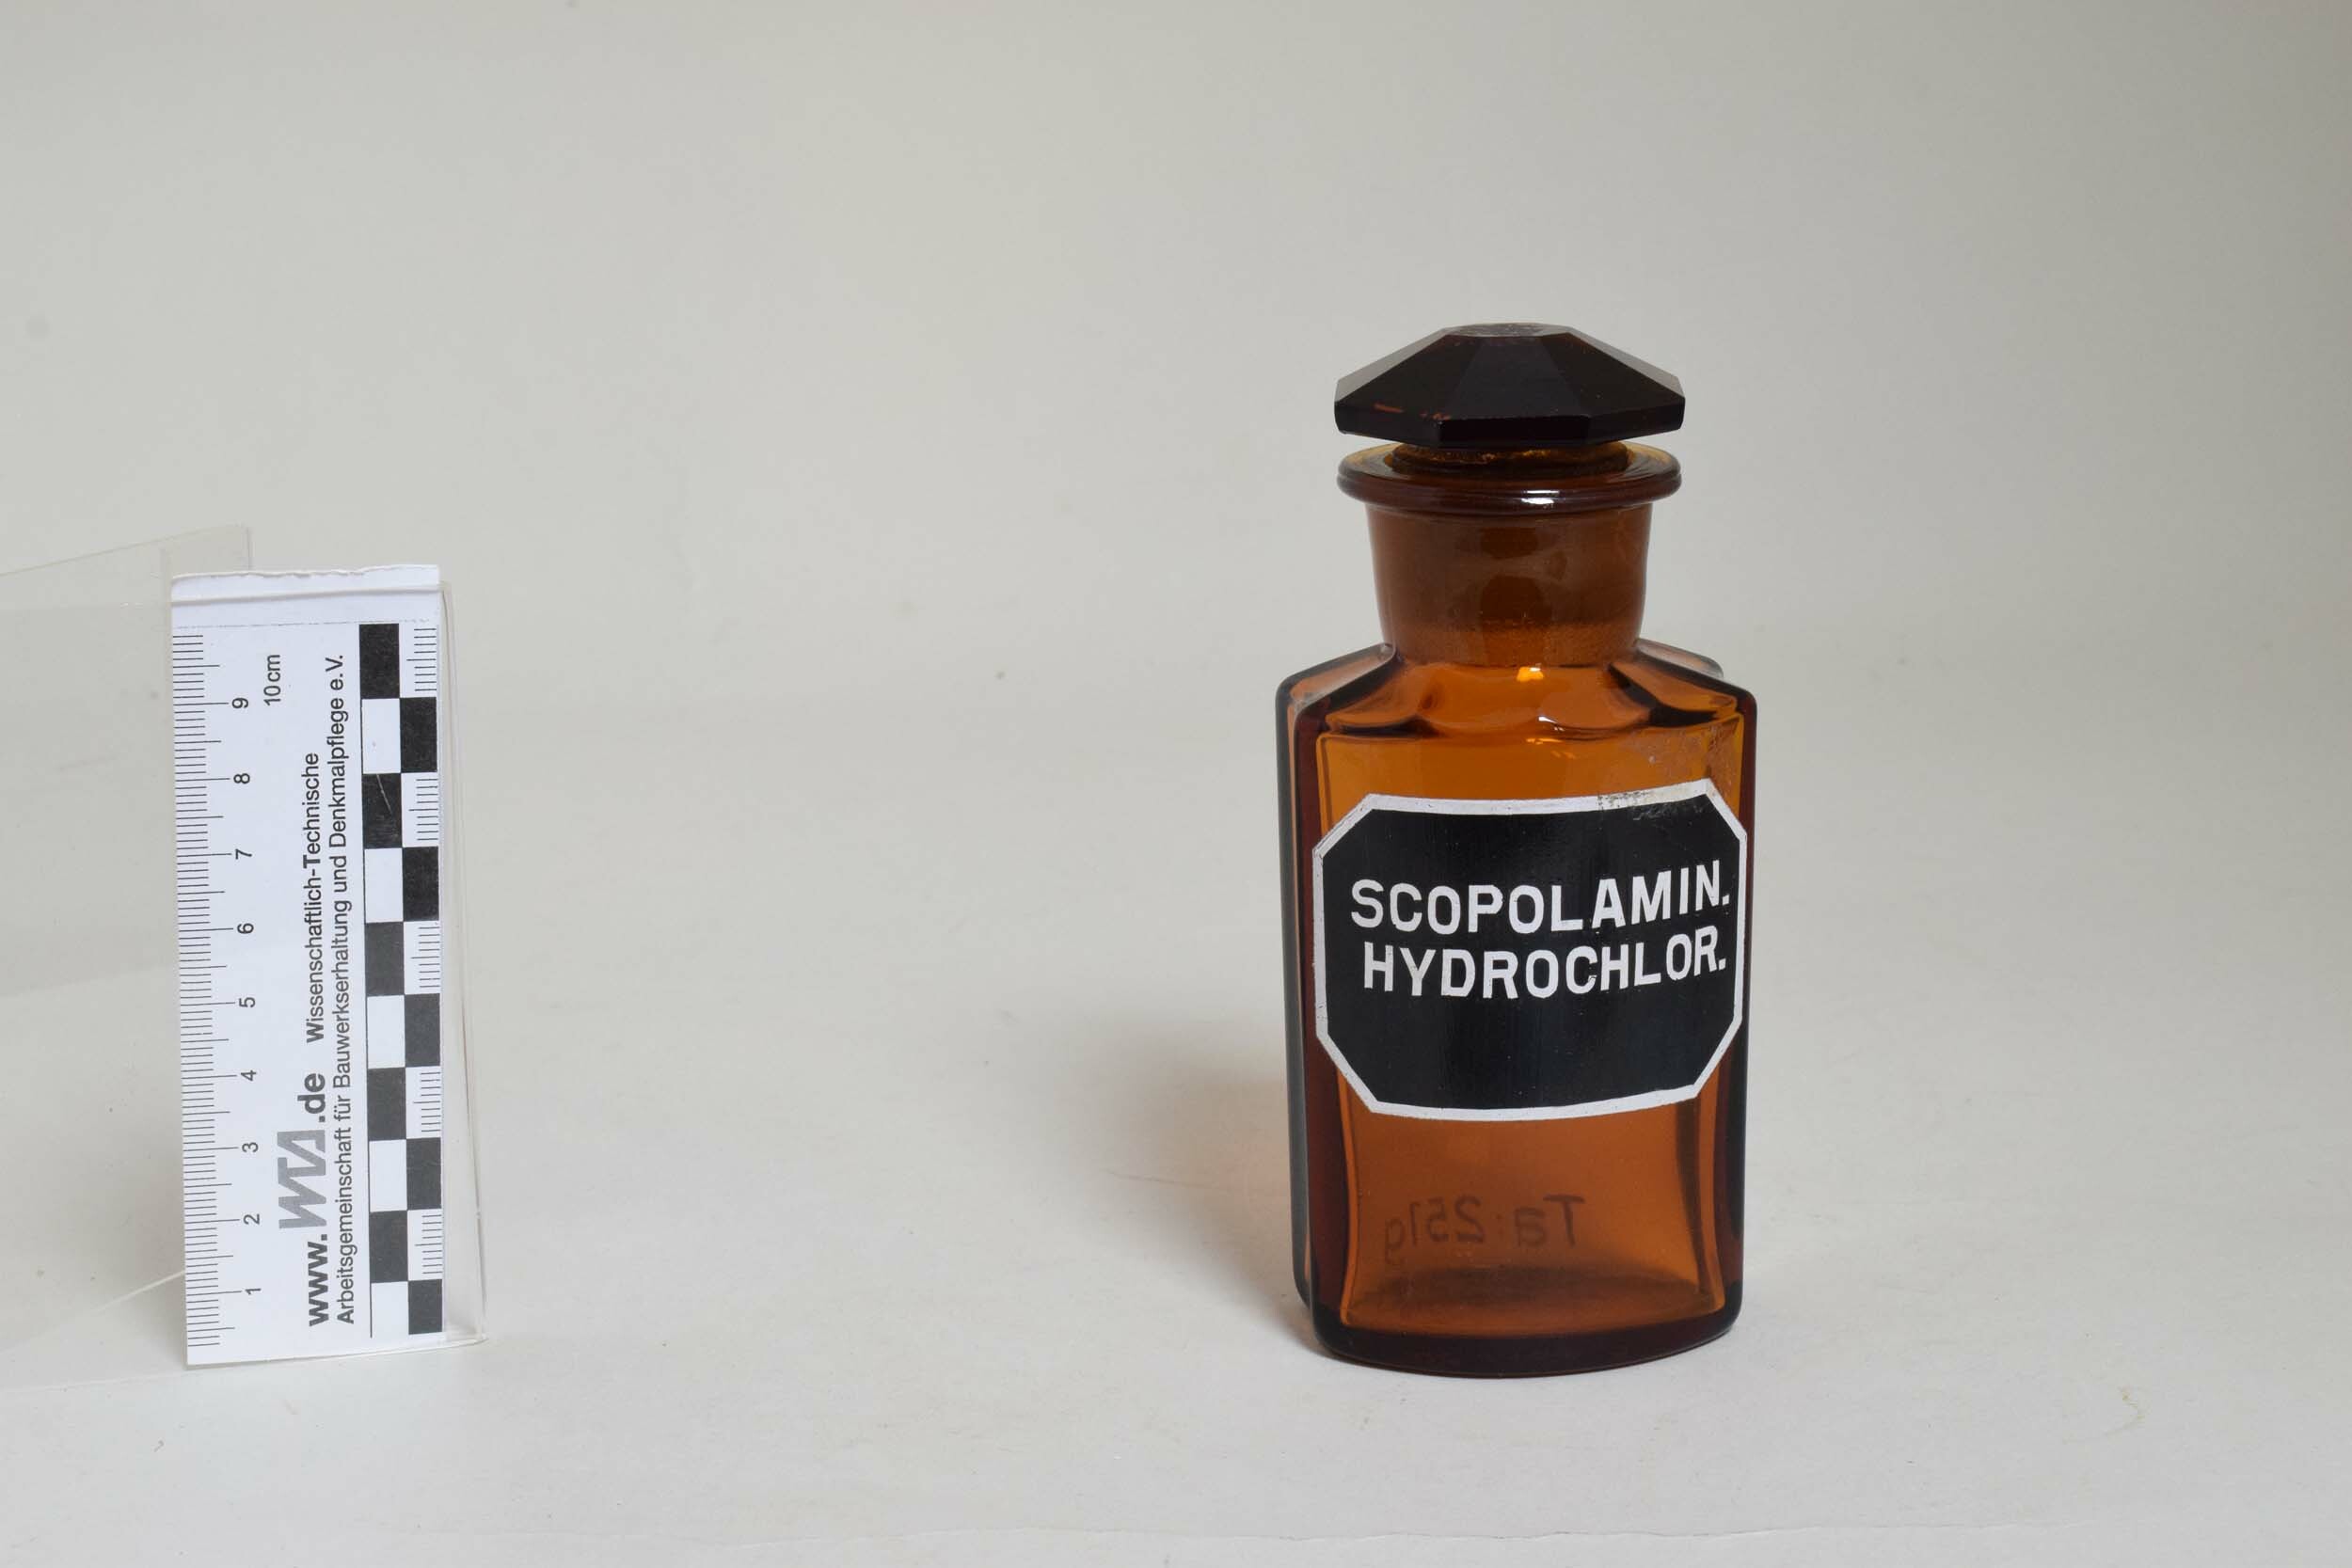 Apothekenflasche "Scopolamin. hydrochlor." (Skopolaminumhydrochlorid) (Heimatmuseum Dohna CC BY-NC-SA)